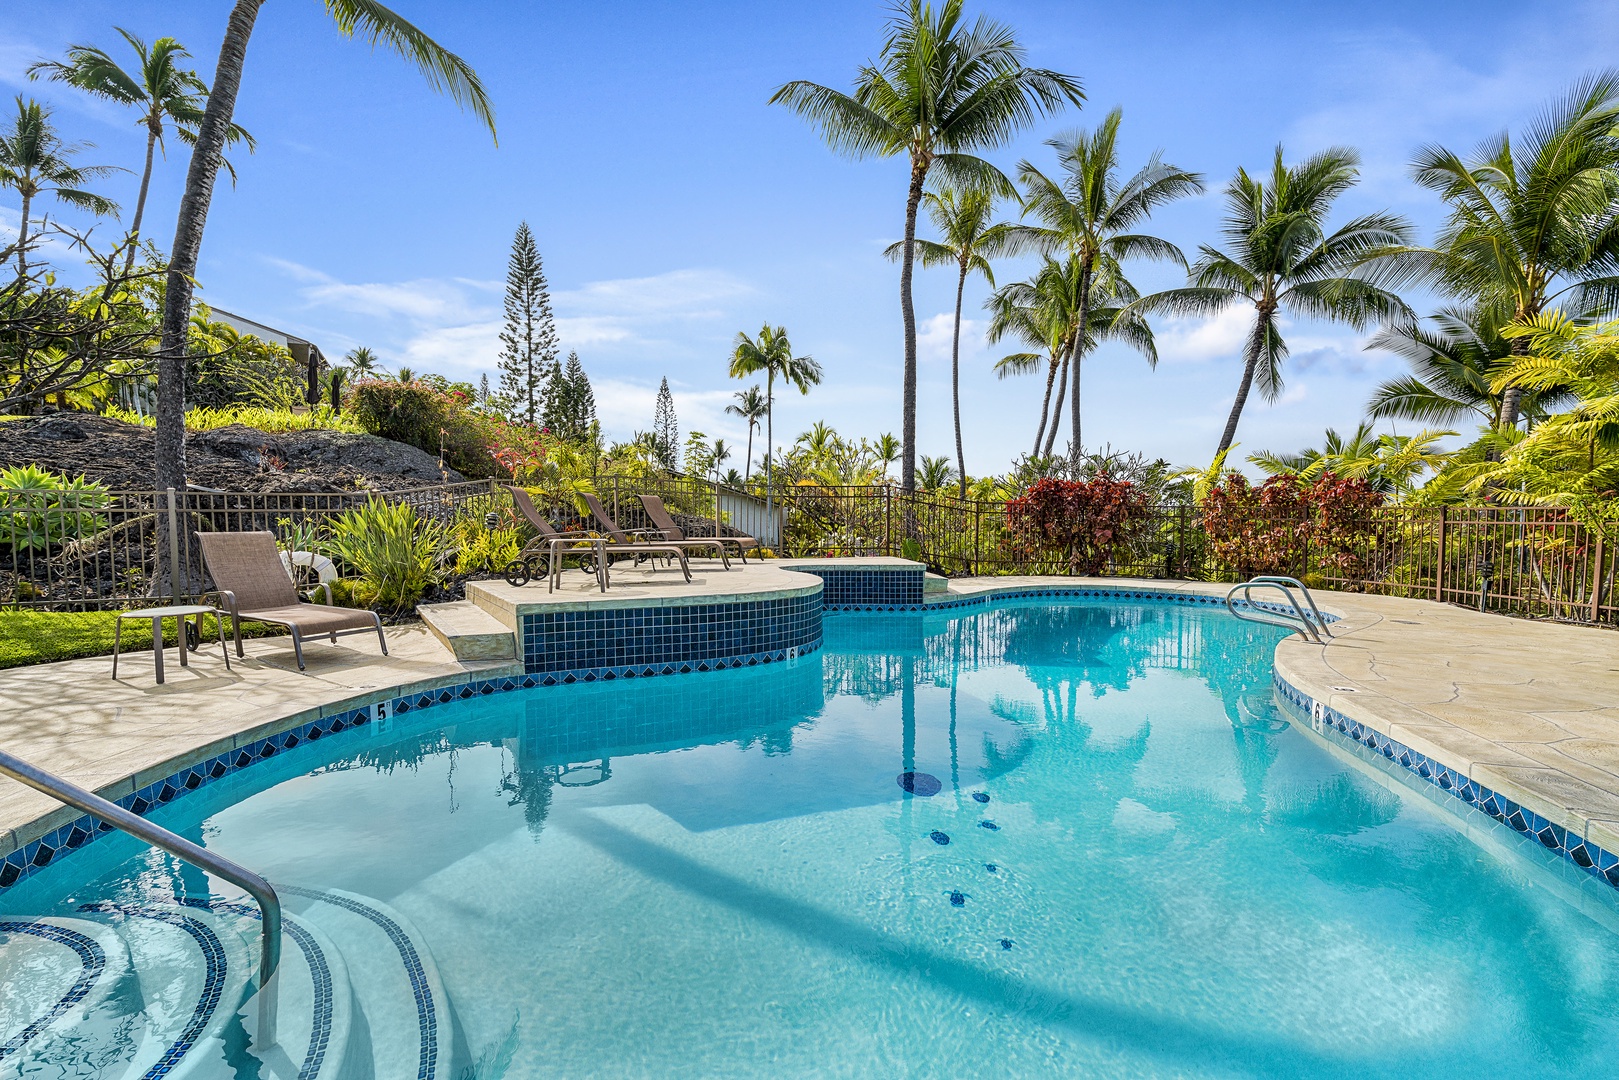 Kailua Kona Vacation Rentals, Keauhou Resort 104 - Keauhou Resort community pool